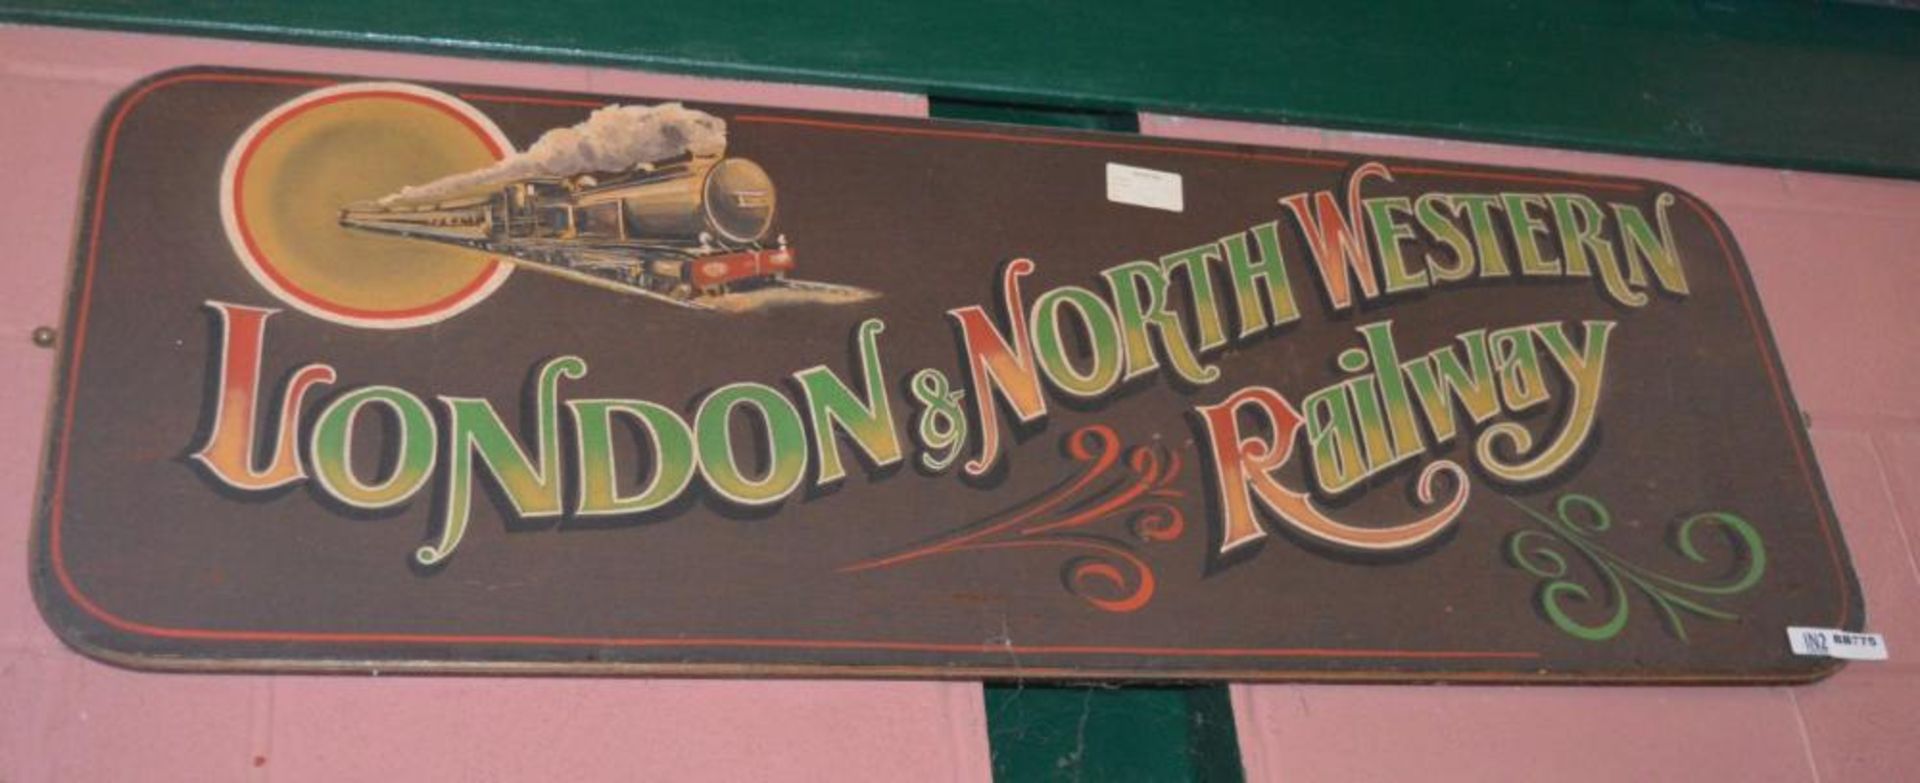 1 x Wall Mounted Train Signage - London & North Western Railways - 5 x 24 Inches - Ref BB774 - CL351